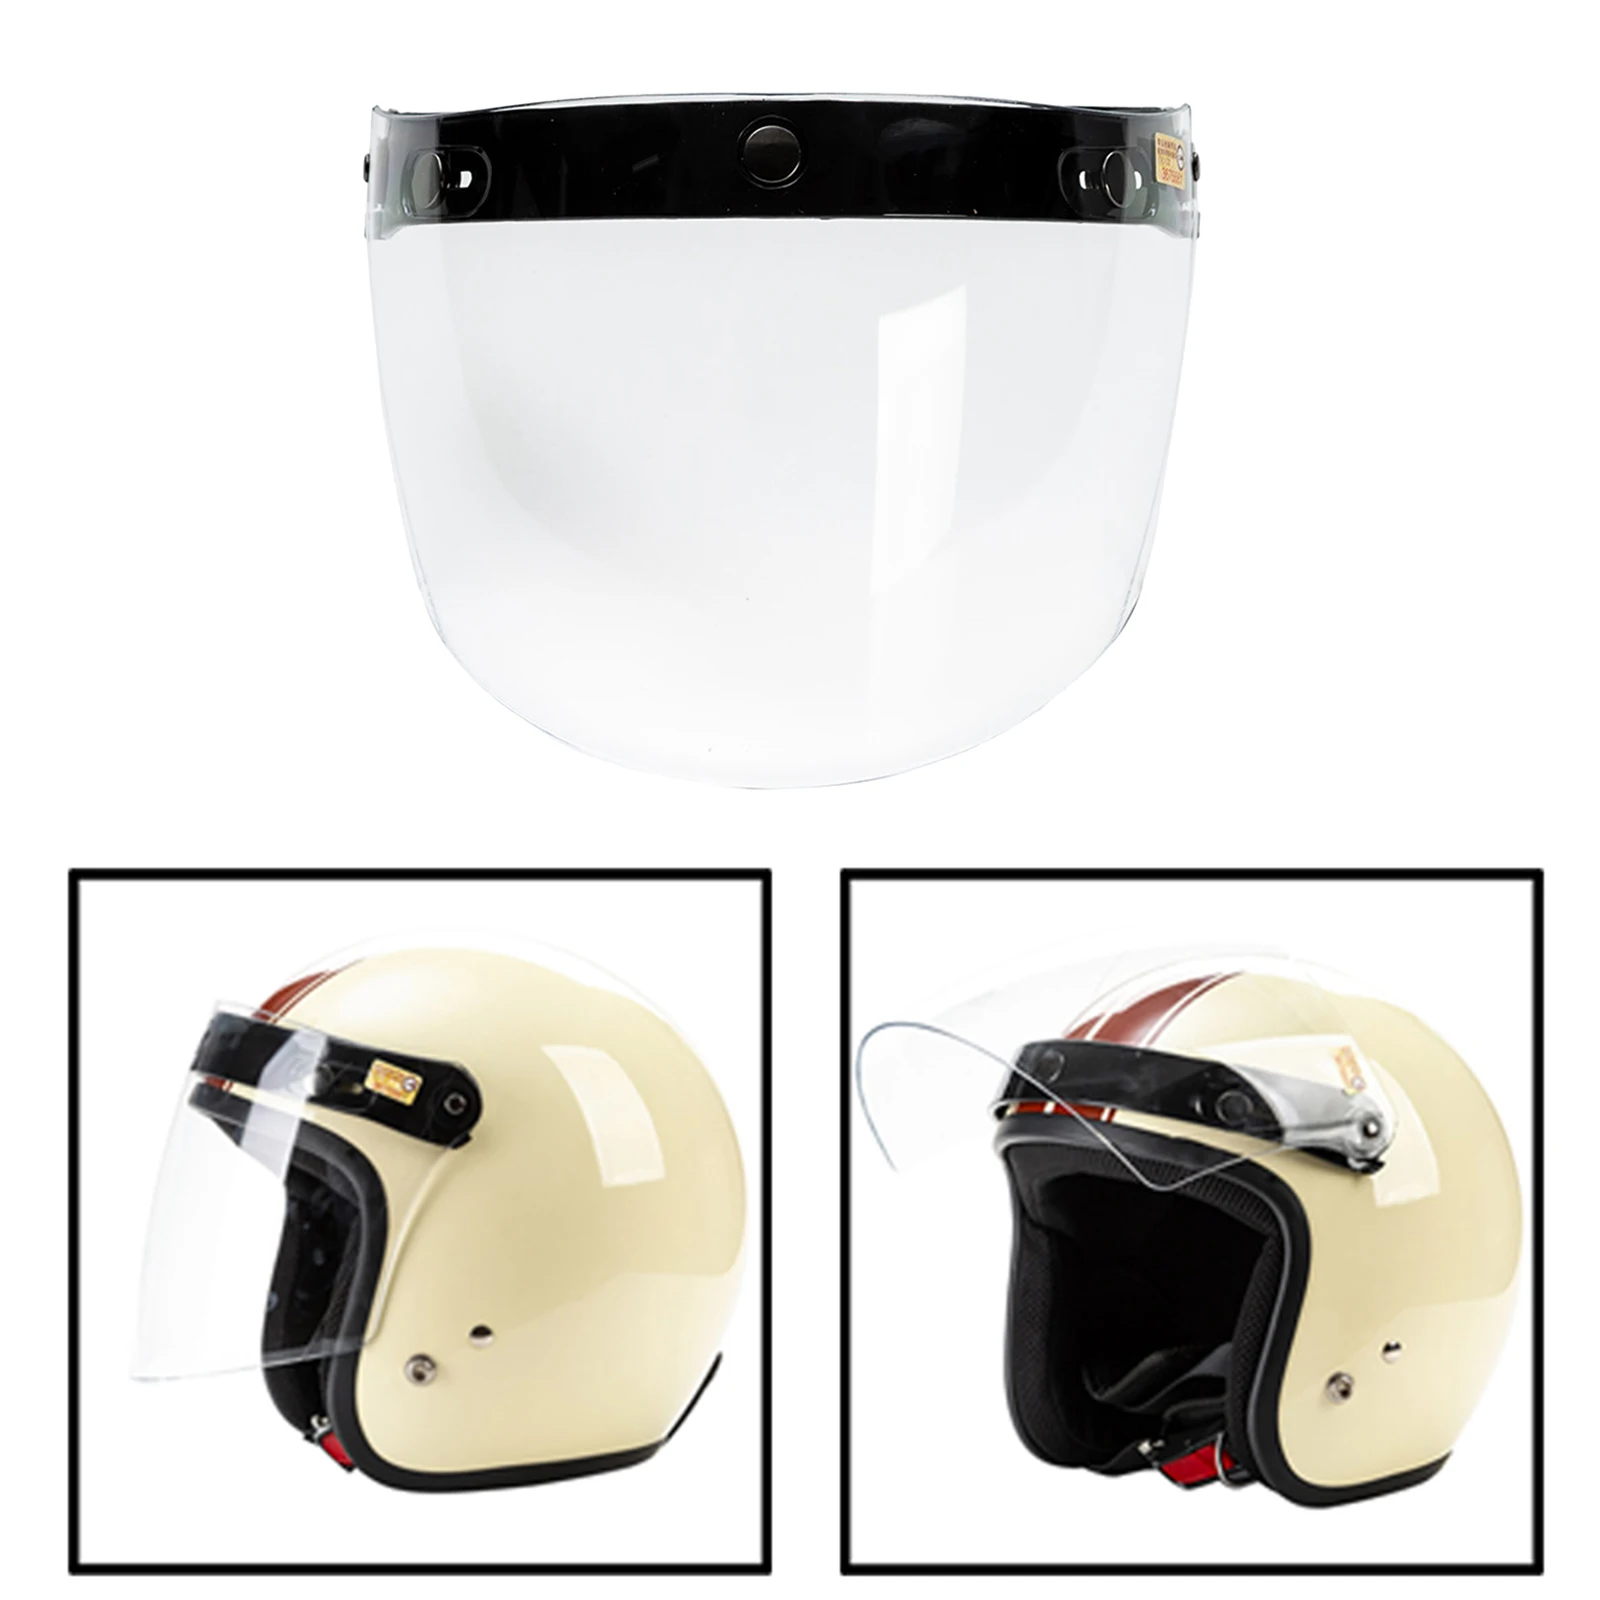 Retro Open Face Motorcycle Helmet Face Shield 3 Snaps Buttons Helmet Visor